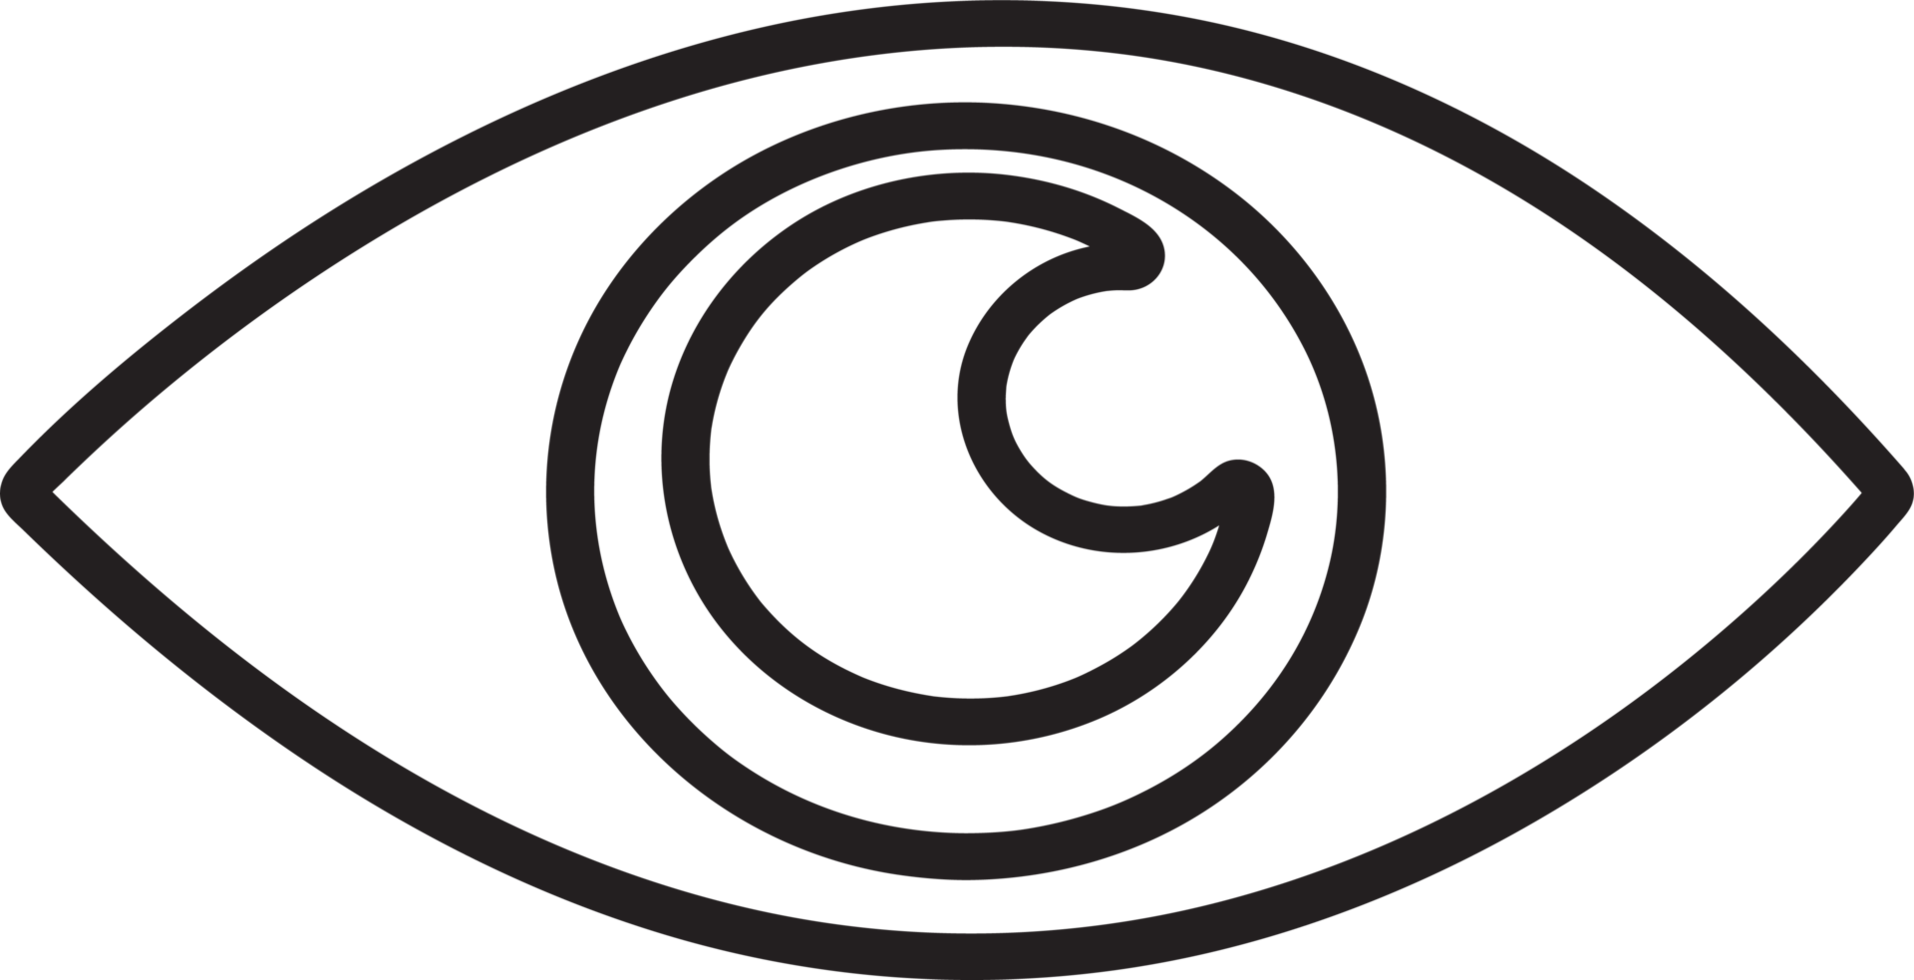 eye icon sign symbol design png